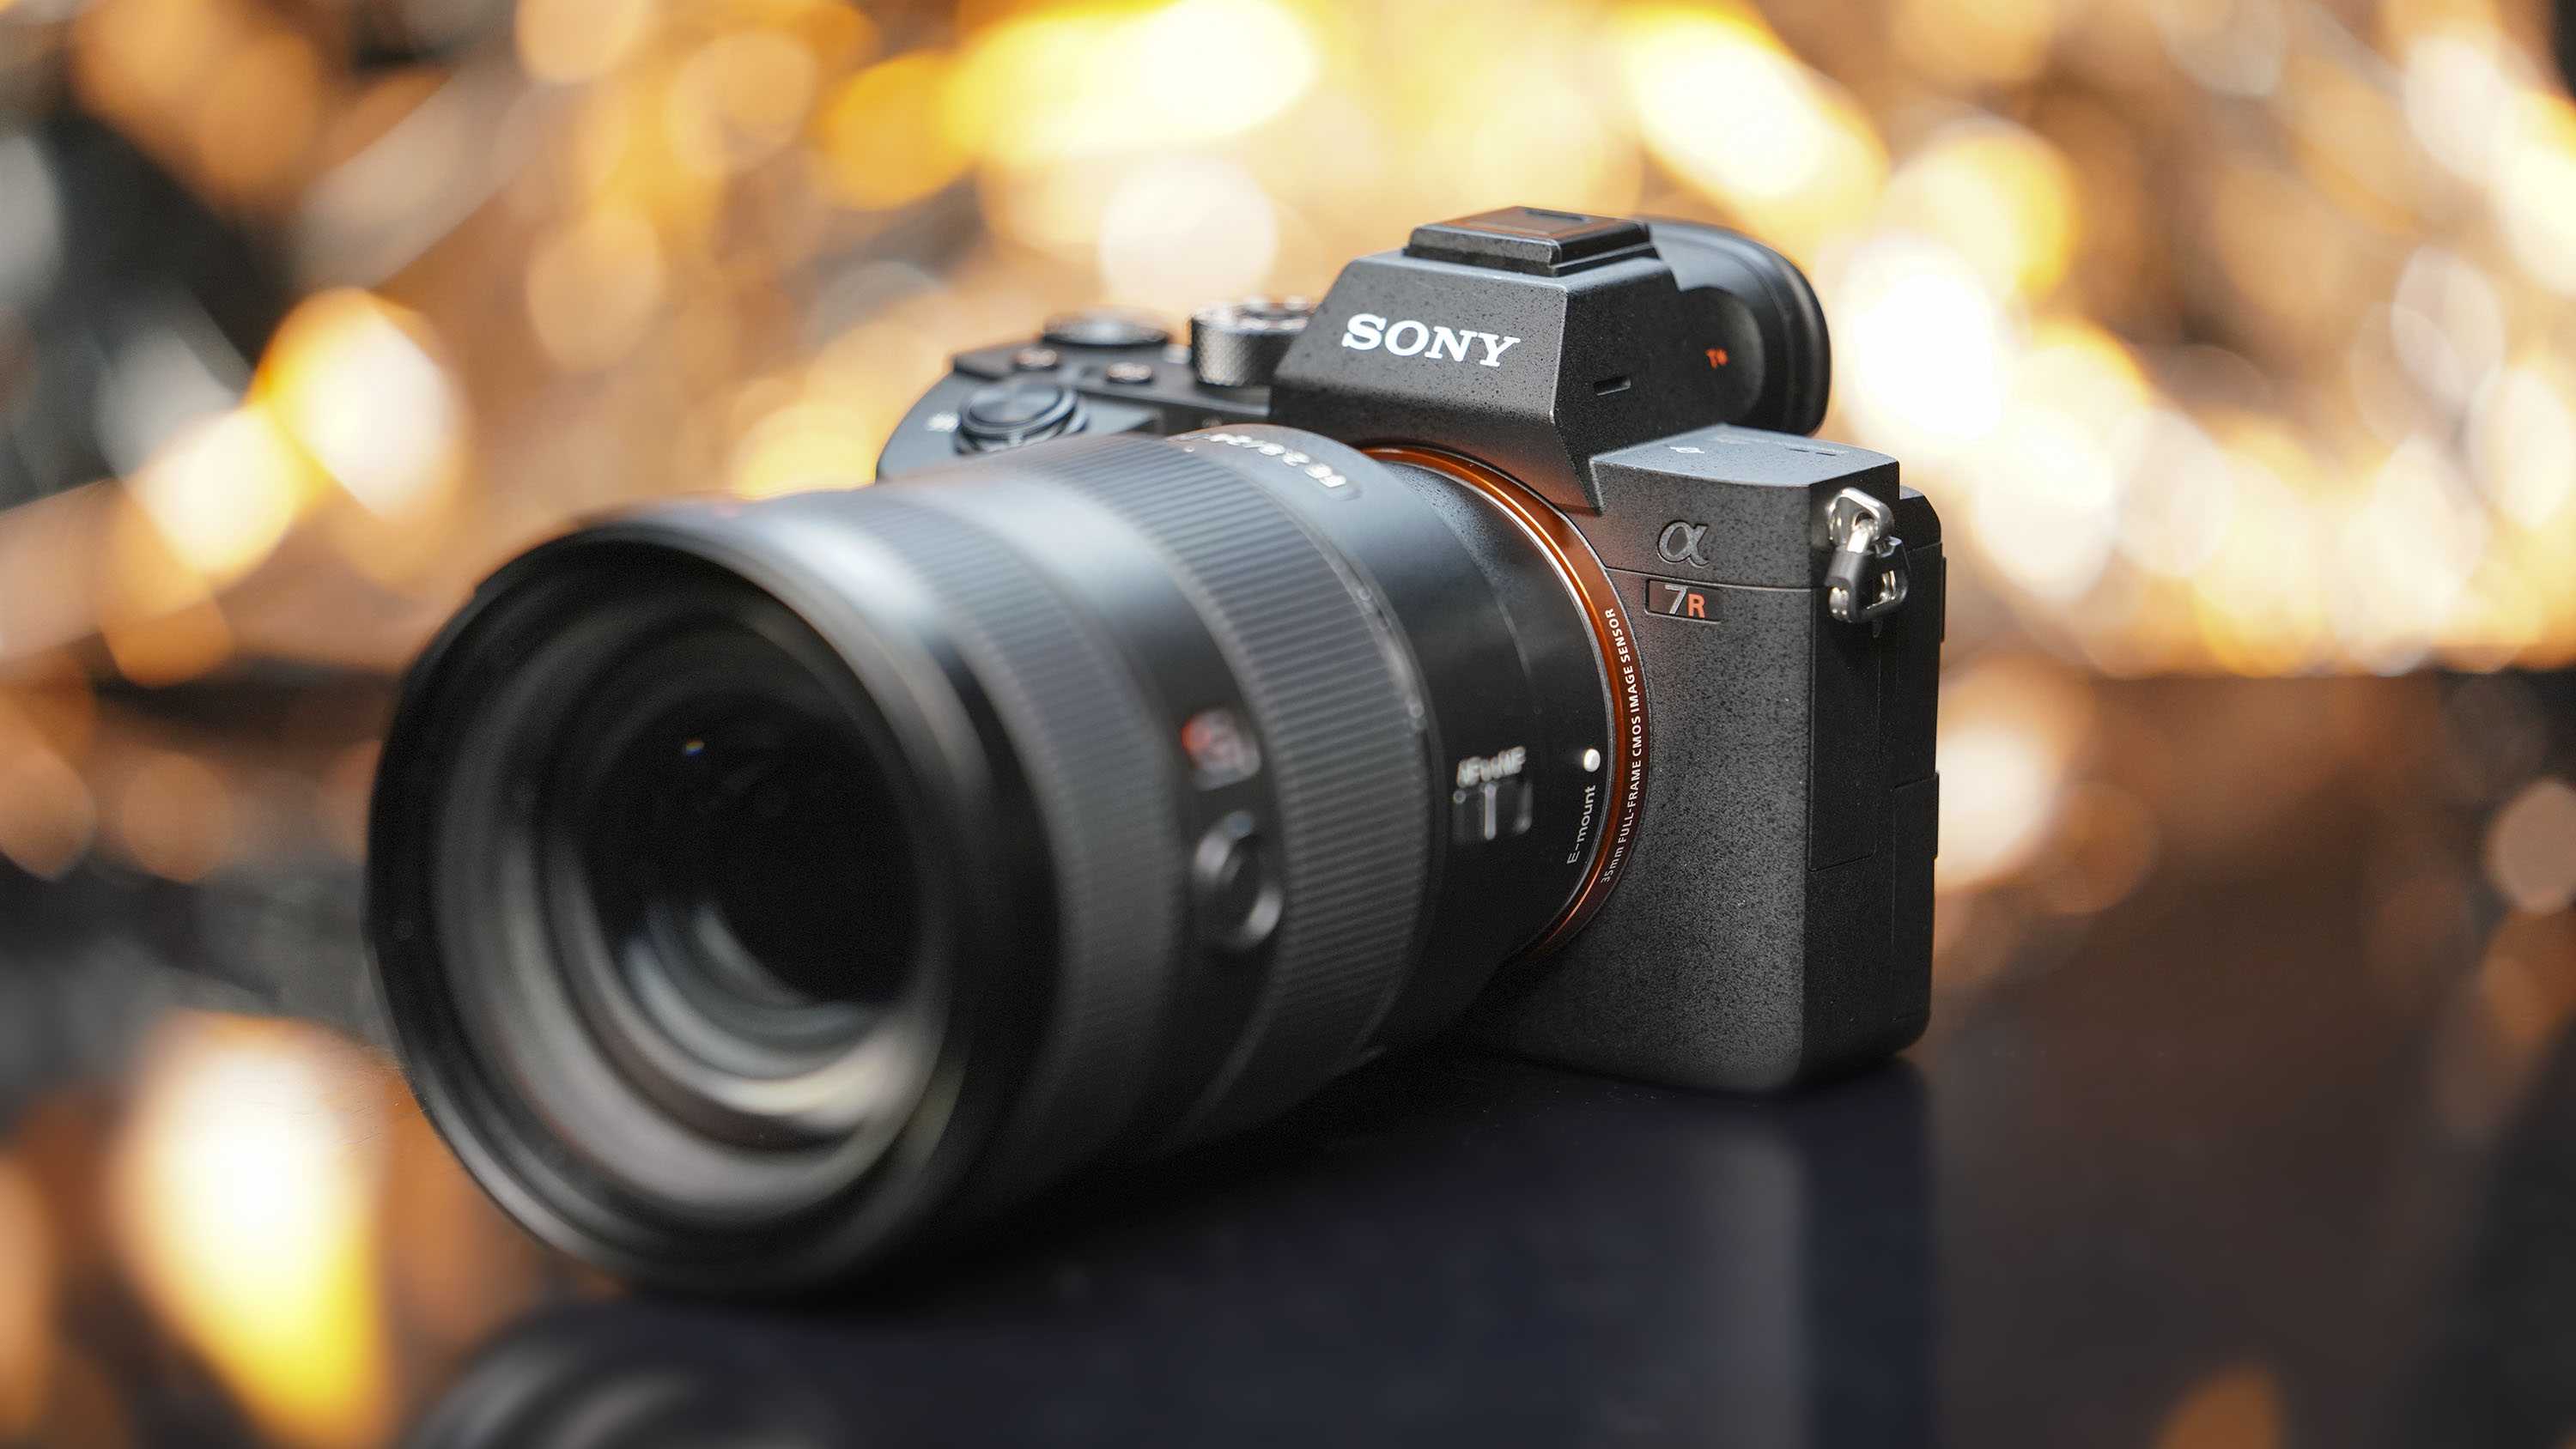 Sony cyber-shot dsc-rx100m7 компактный фотоаппарат